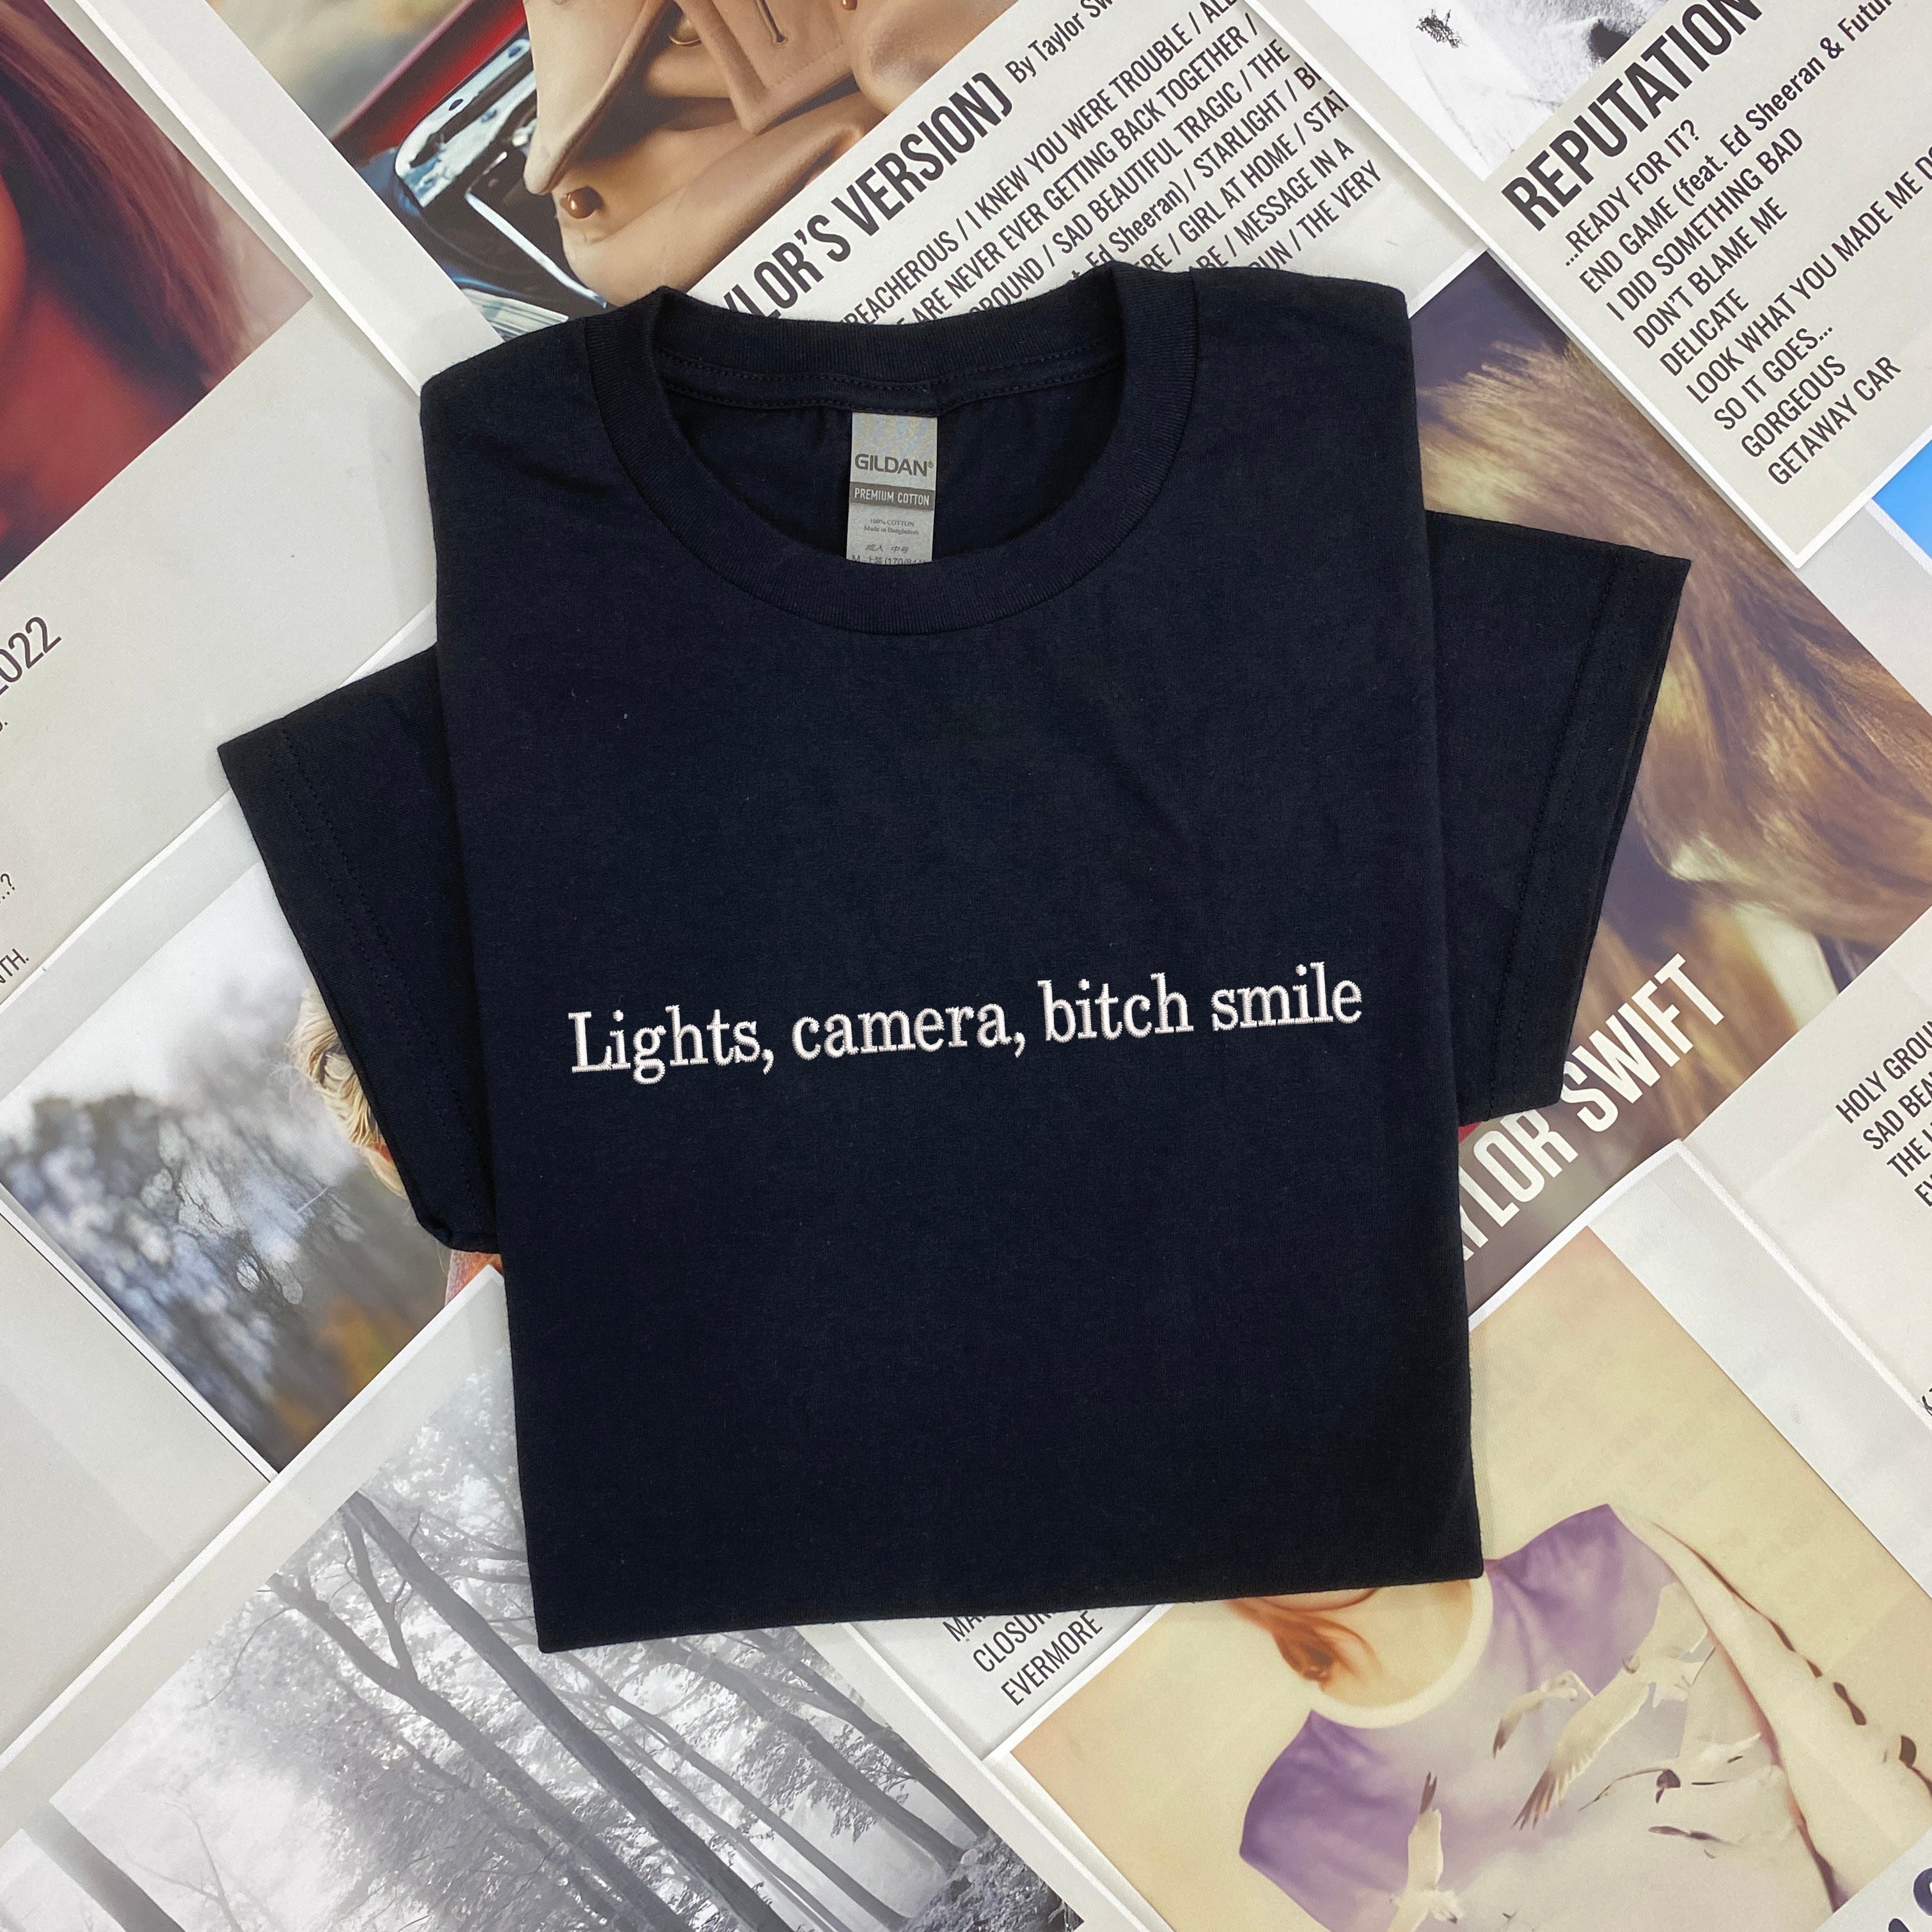 light camera bitch smile embroidered shirt 1714010592662.jpg